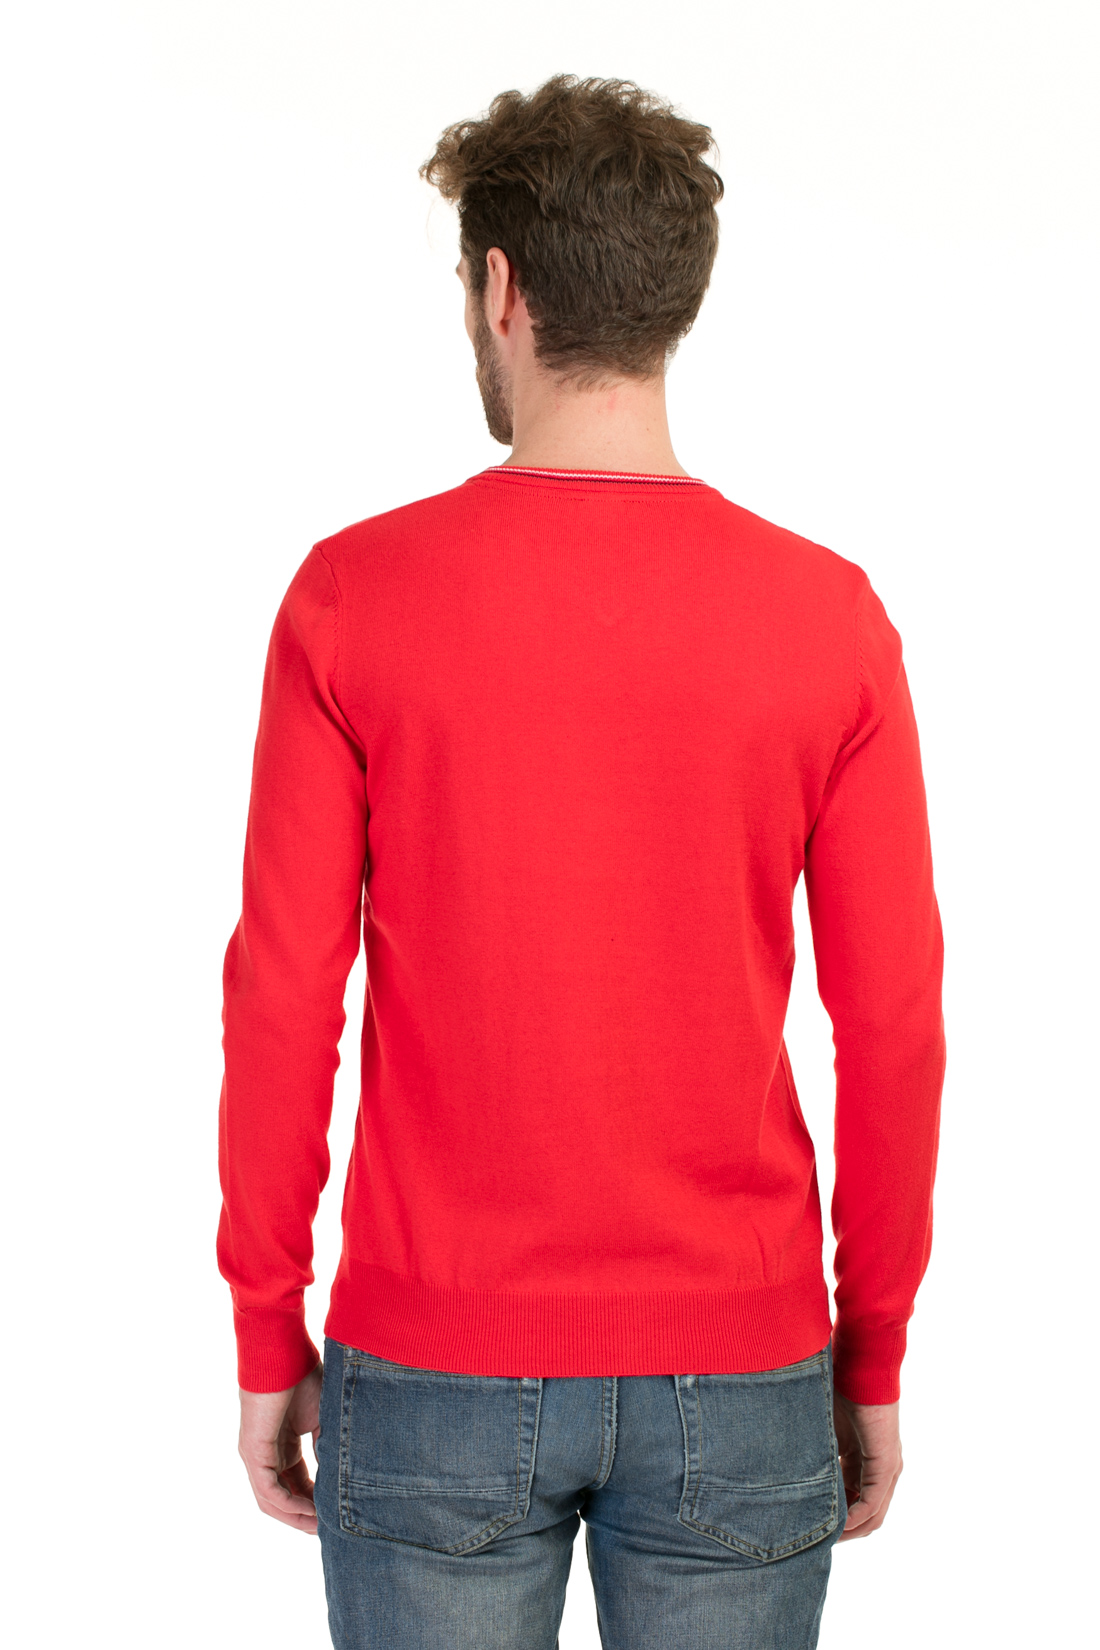 Пуловер с окантовкой на вырезе (арт. baon B637004), размер M, цвет красный Пуловер с окантовкой на вырезе (арт. baon B637004) - фото 2